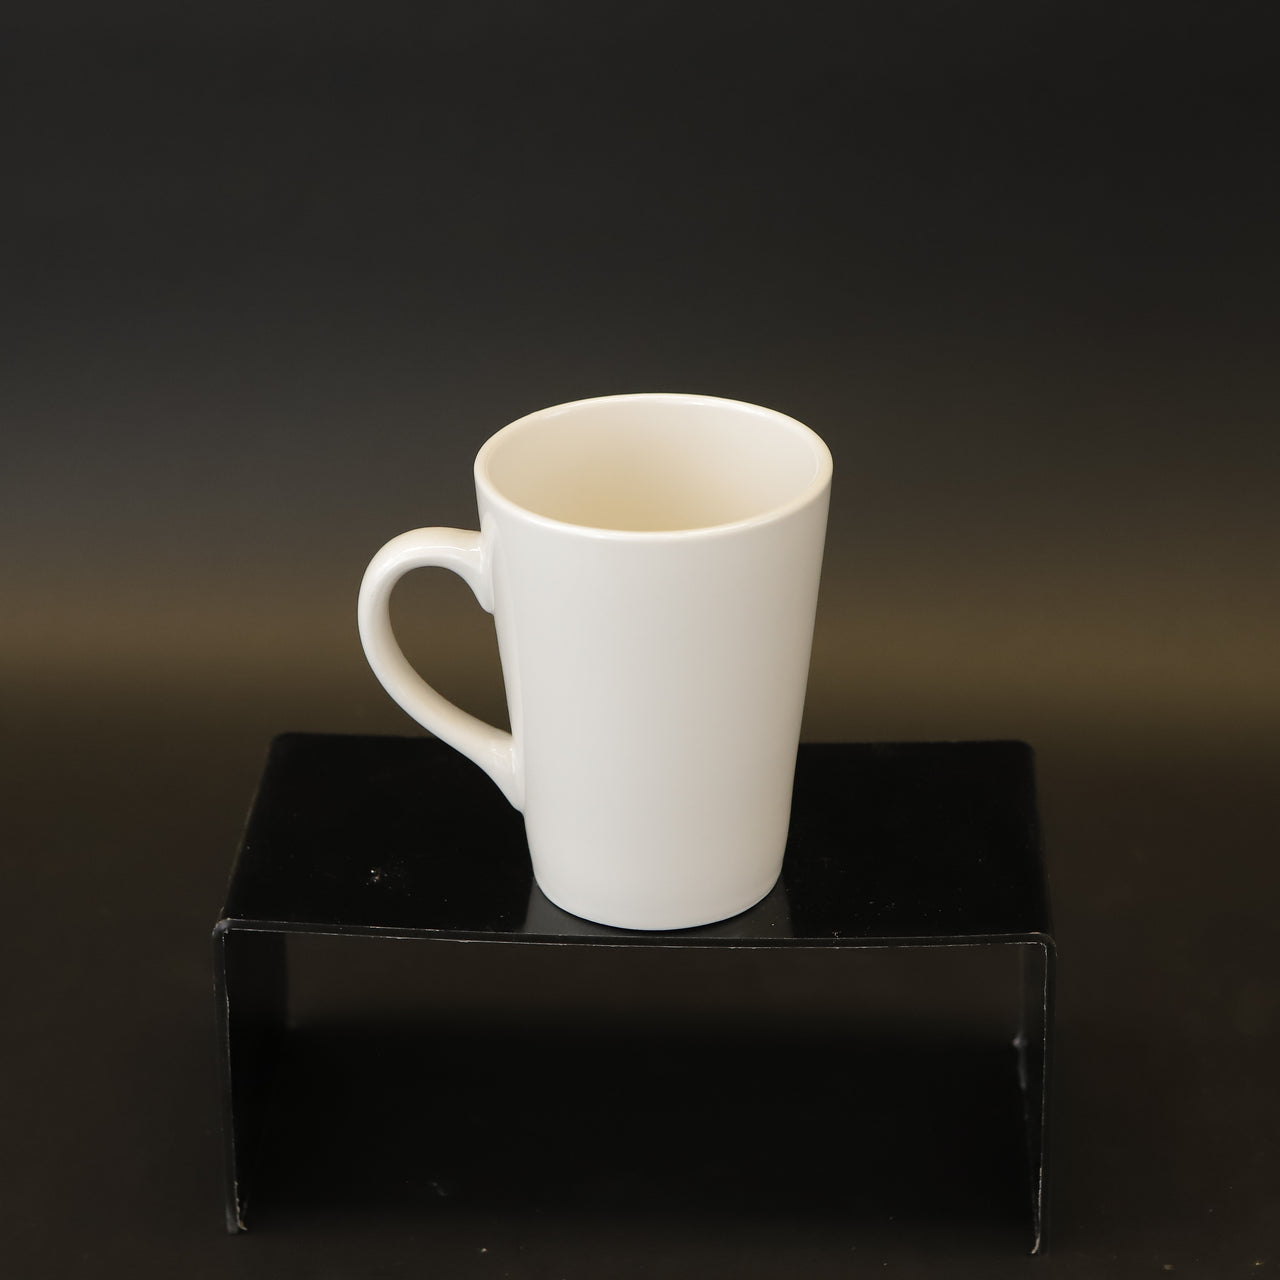 HCCH8908 - Classic White Mug - L